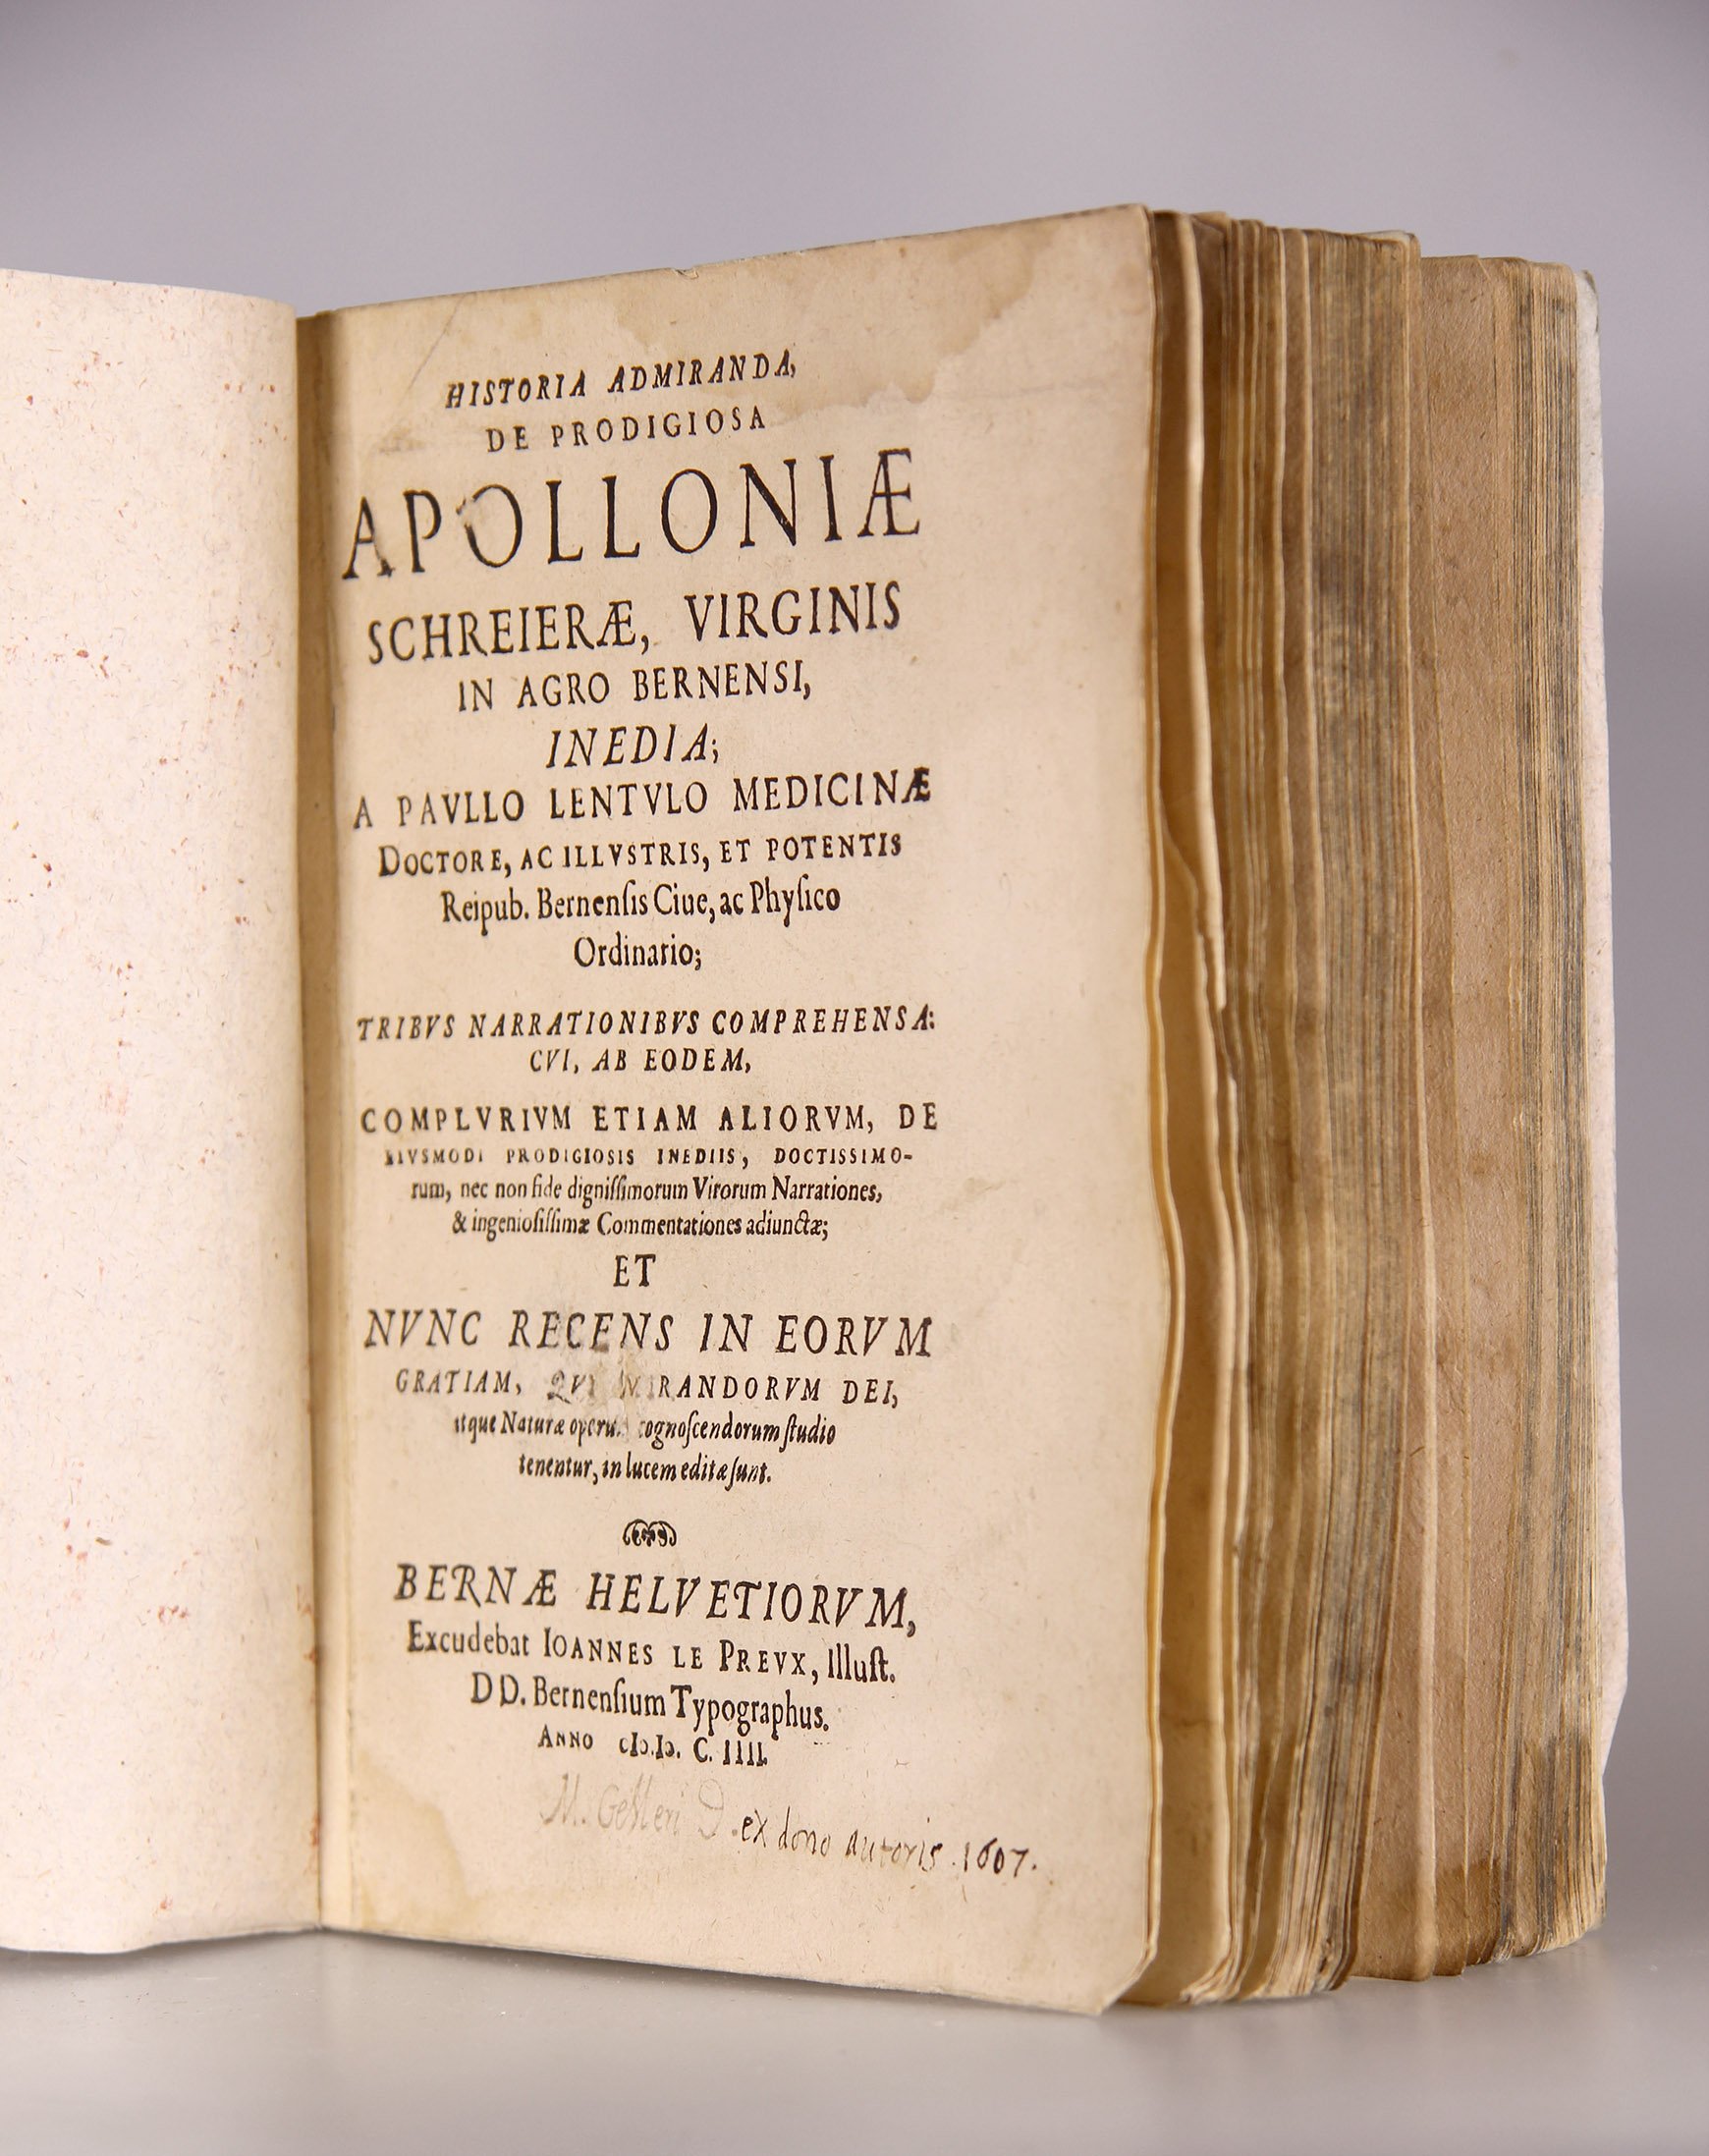 Paulus Lentulus, Historia admiranda de prodigiosa Apolloniae Schreierae (Wilhelm-Fabry-Museum CC BY-NC-SA)